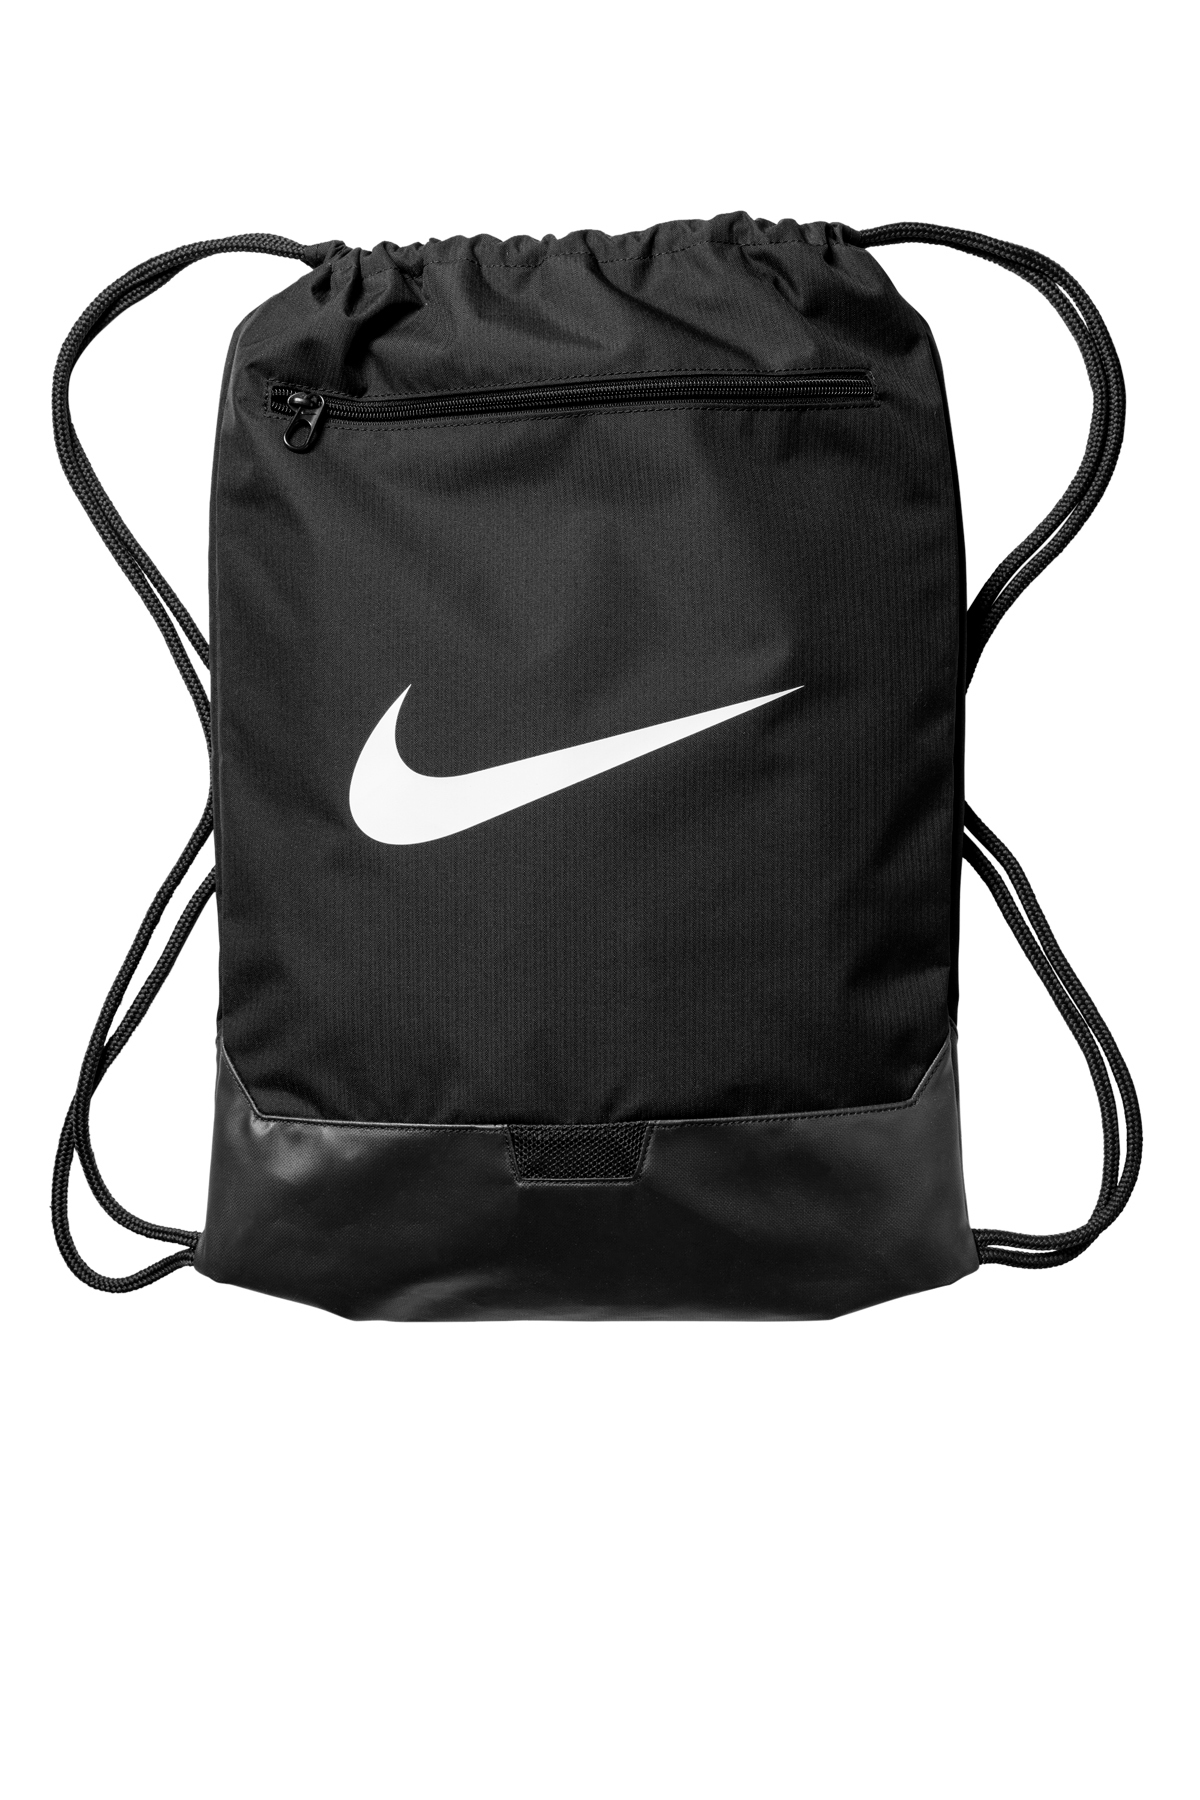 Nike Brasilia Drawstring Pack, Product